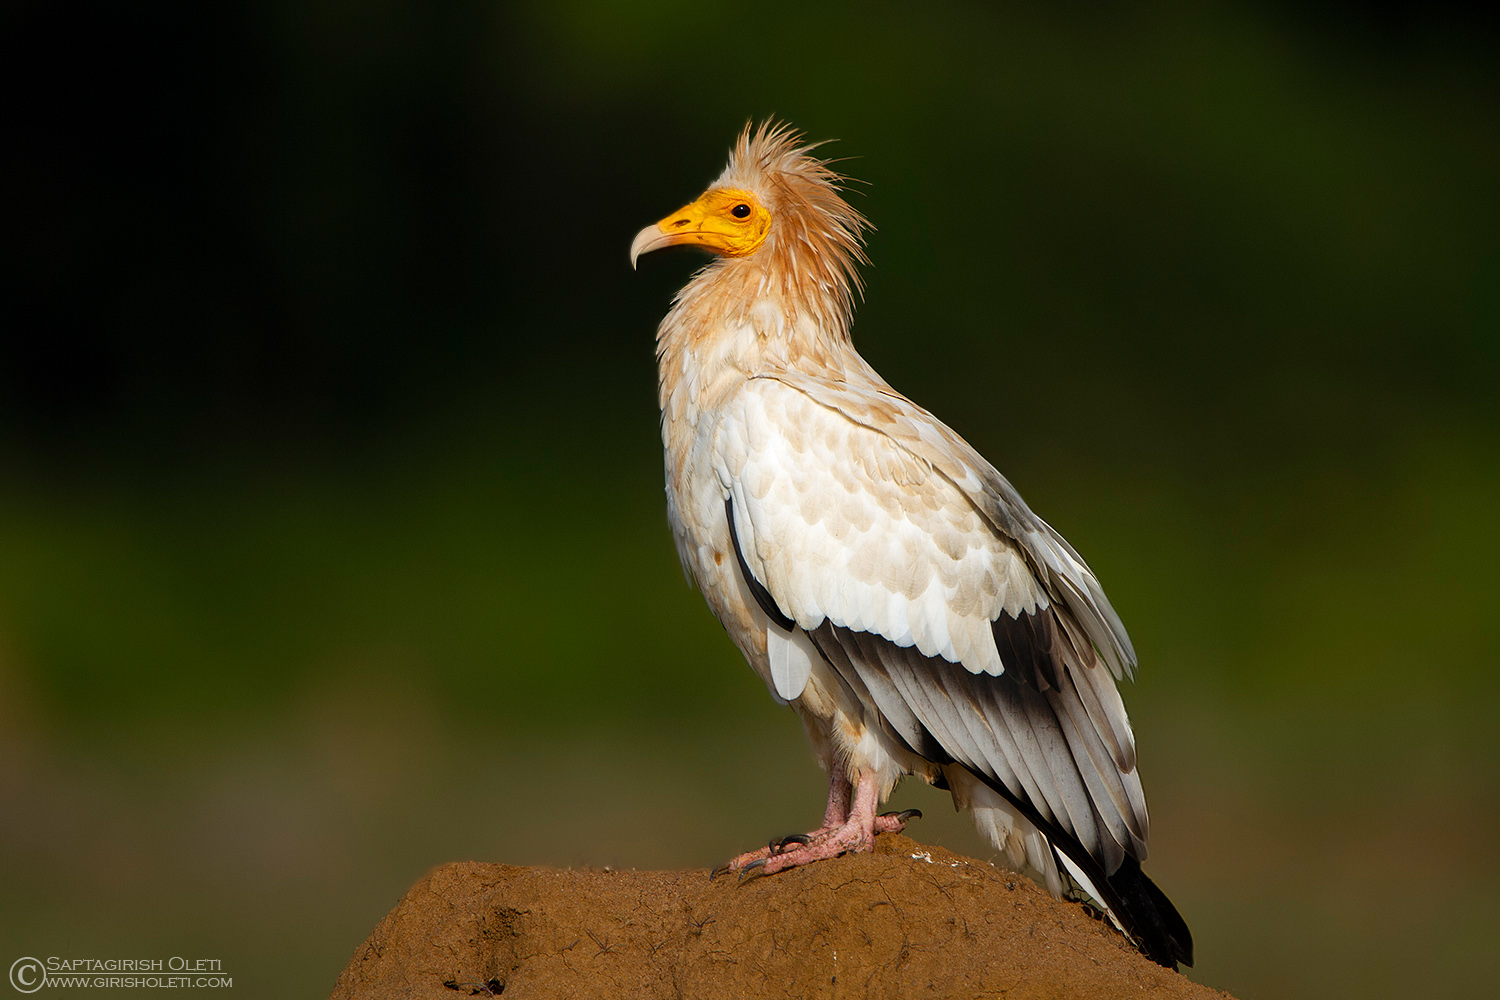 Egyptian Vulture photographed at Bangalore, India